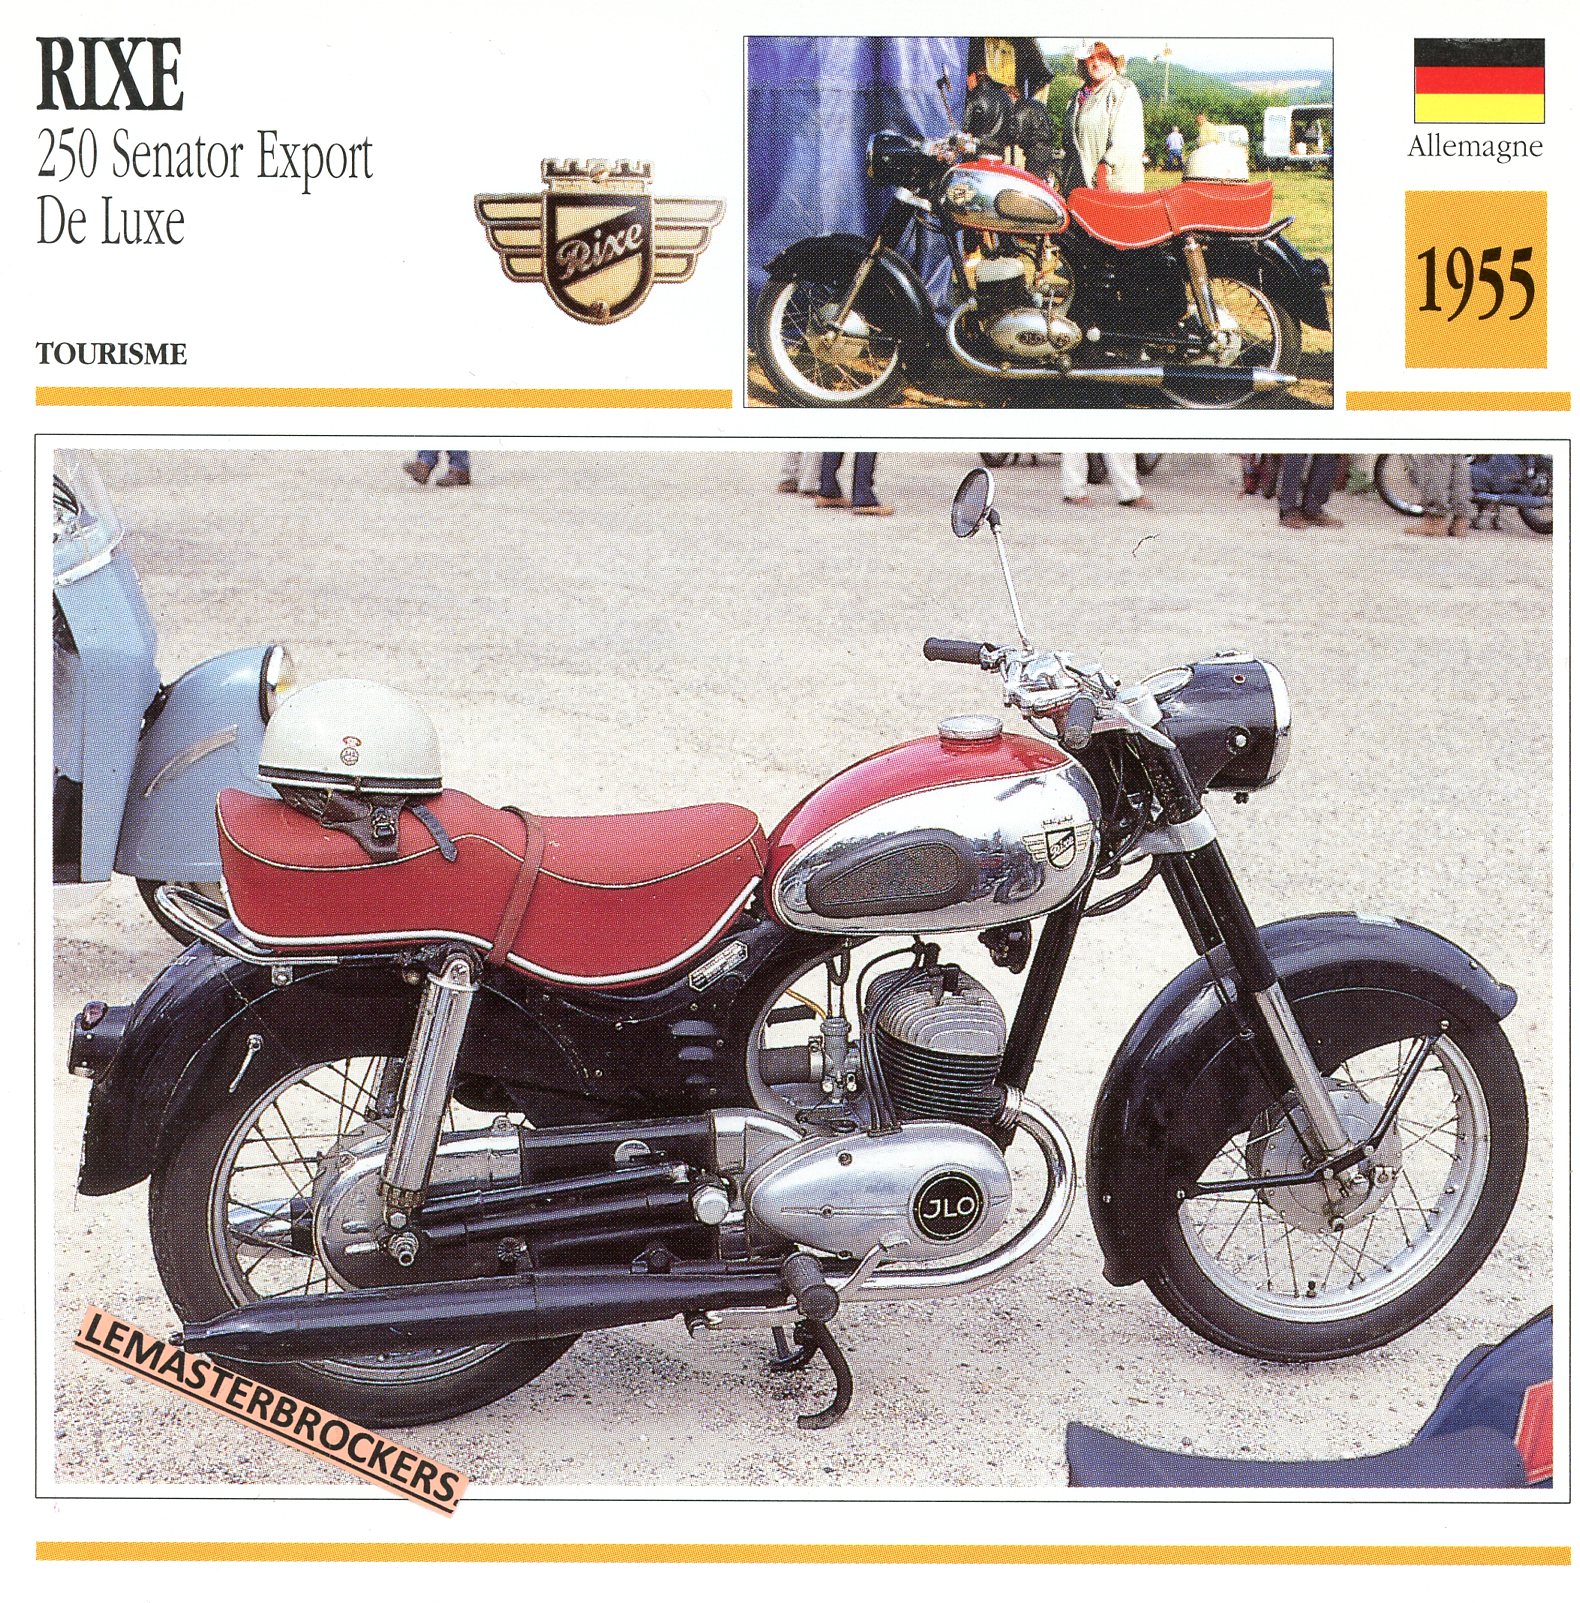 RIXE-250-SENATOR-1955-FICHE-MOTO-ATLAS-lemasterbrockers-CARD-MOTORCYCLE